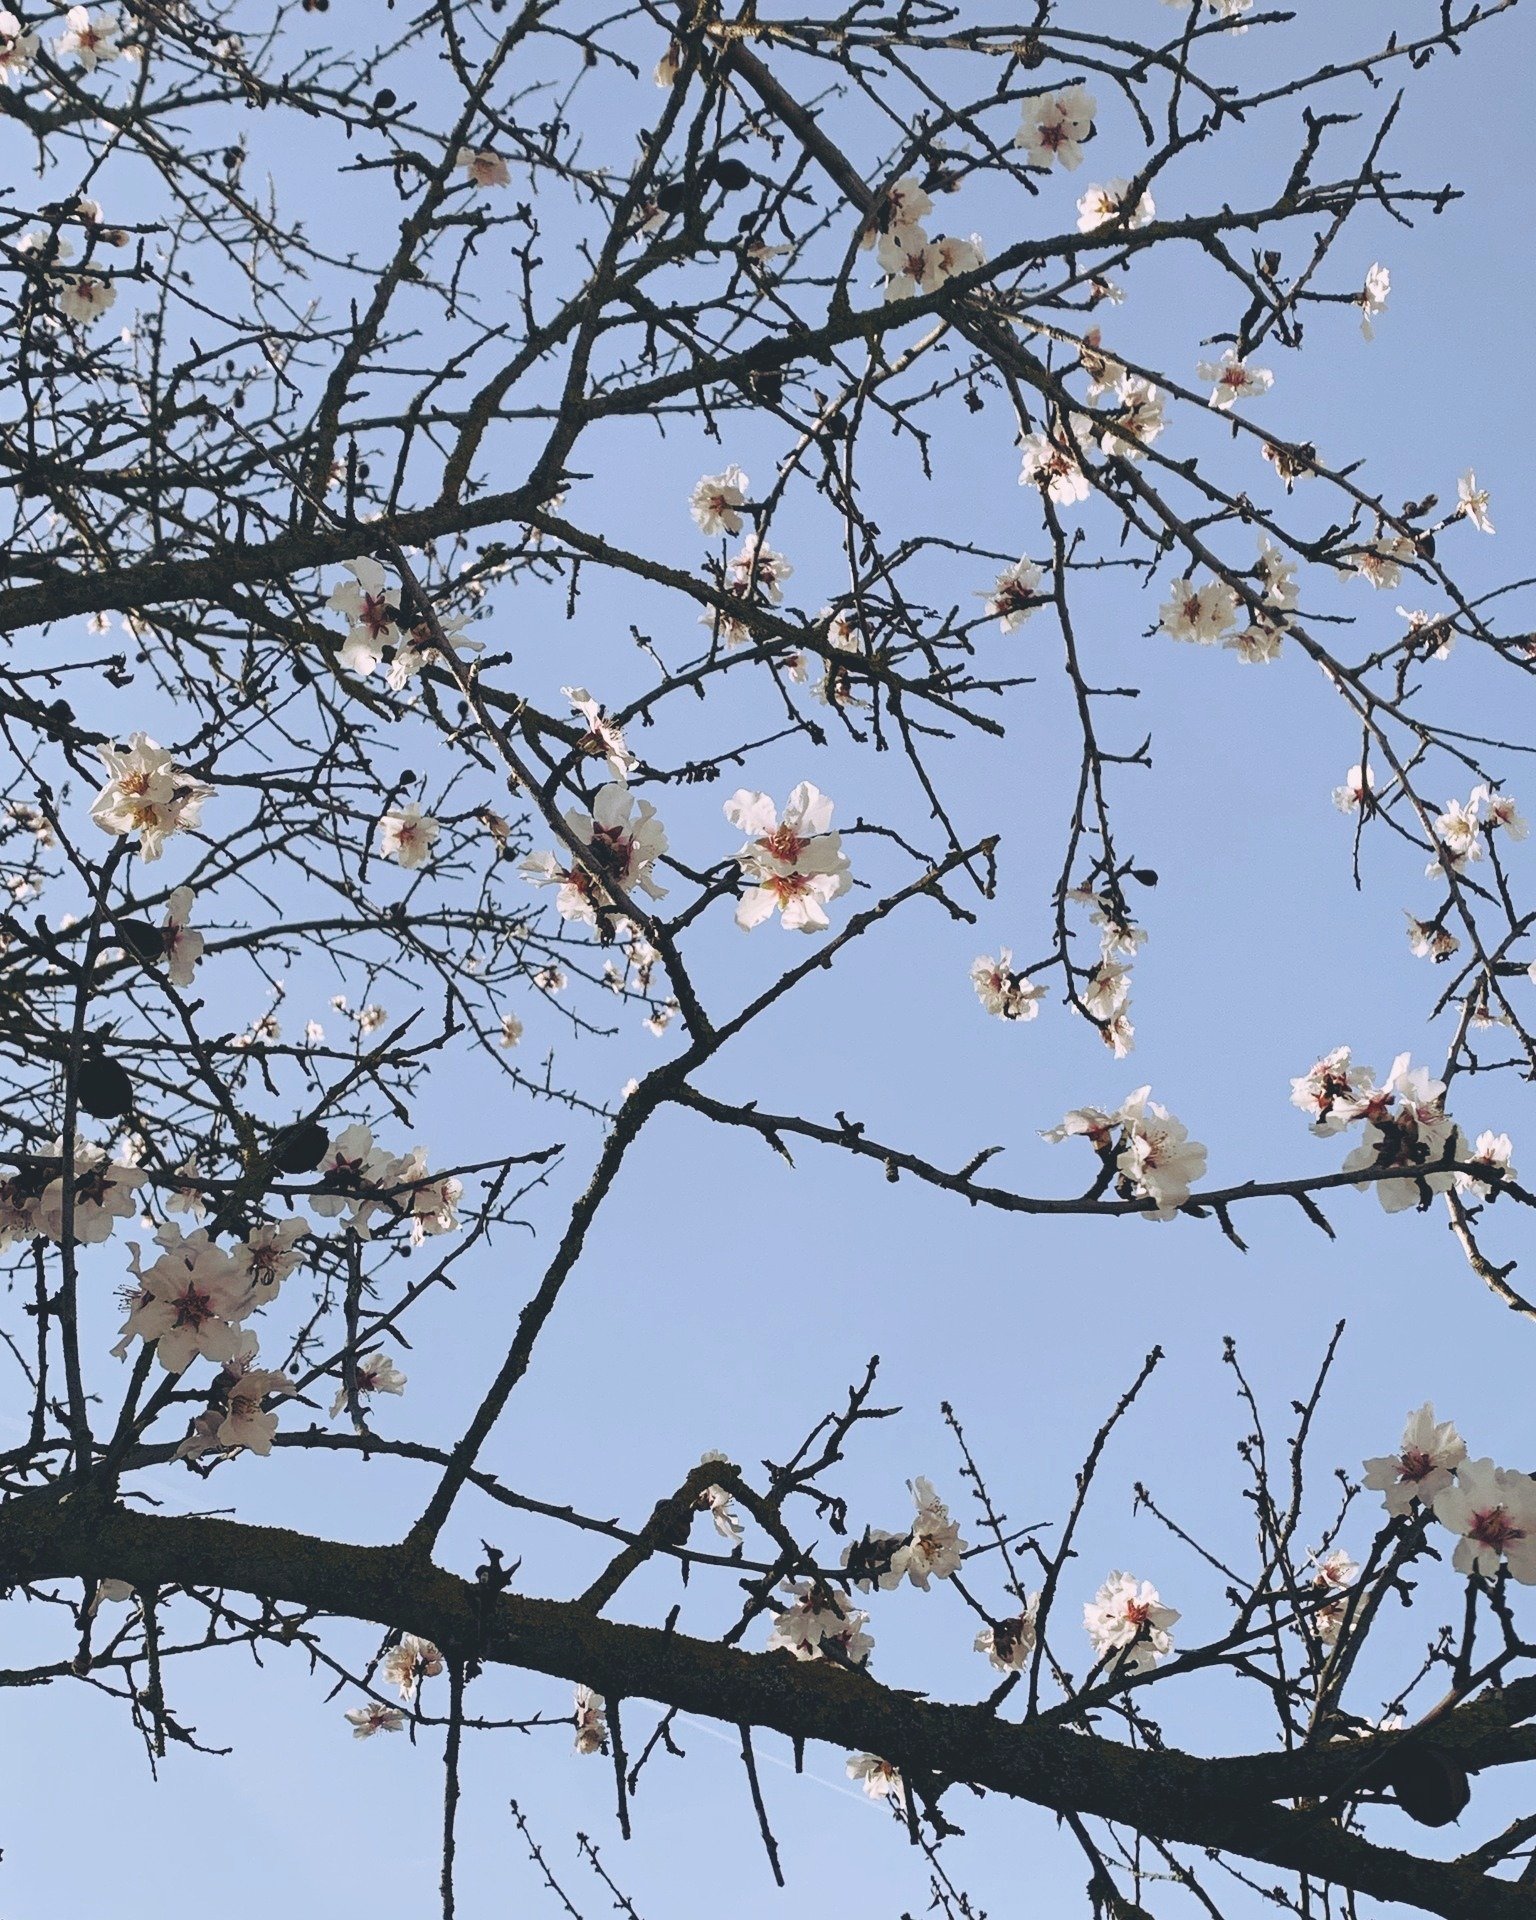 La primavera &egrave; un modo gentile della natura di dirci: 'Sorridi, la vita &egrave; bella!
-----
Spring is nature's gentle way to tell us: 'Smile, life is beautiful!

#RevaResort #primaveraamonforte #springtimeinLanga